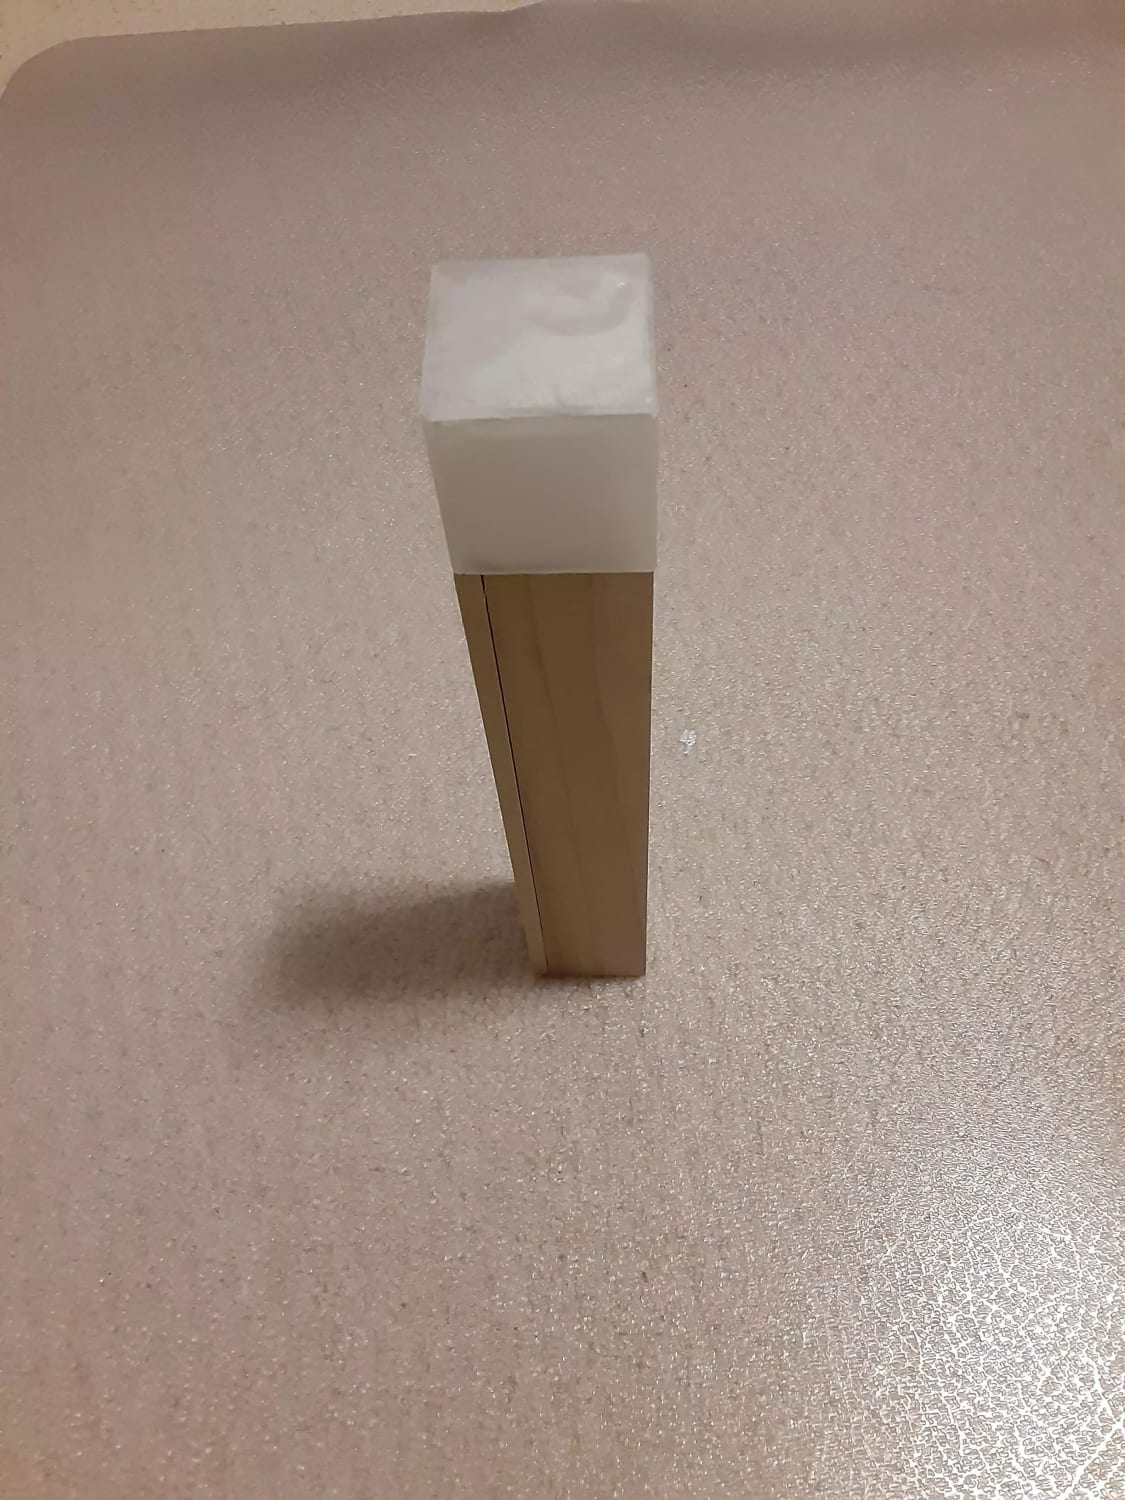 I made a Minecraft torch nightlight (MKII)